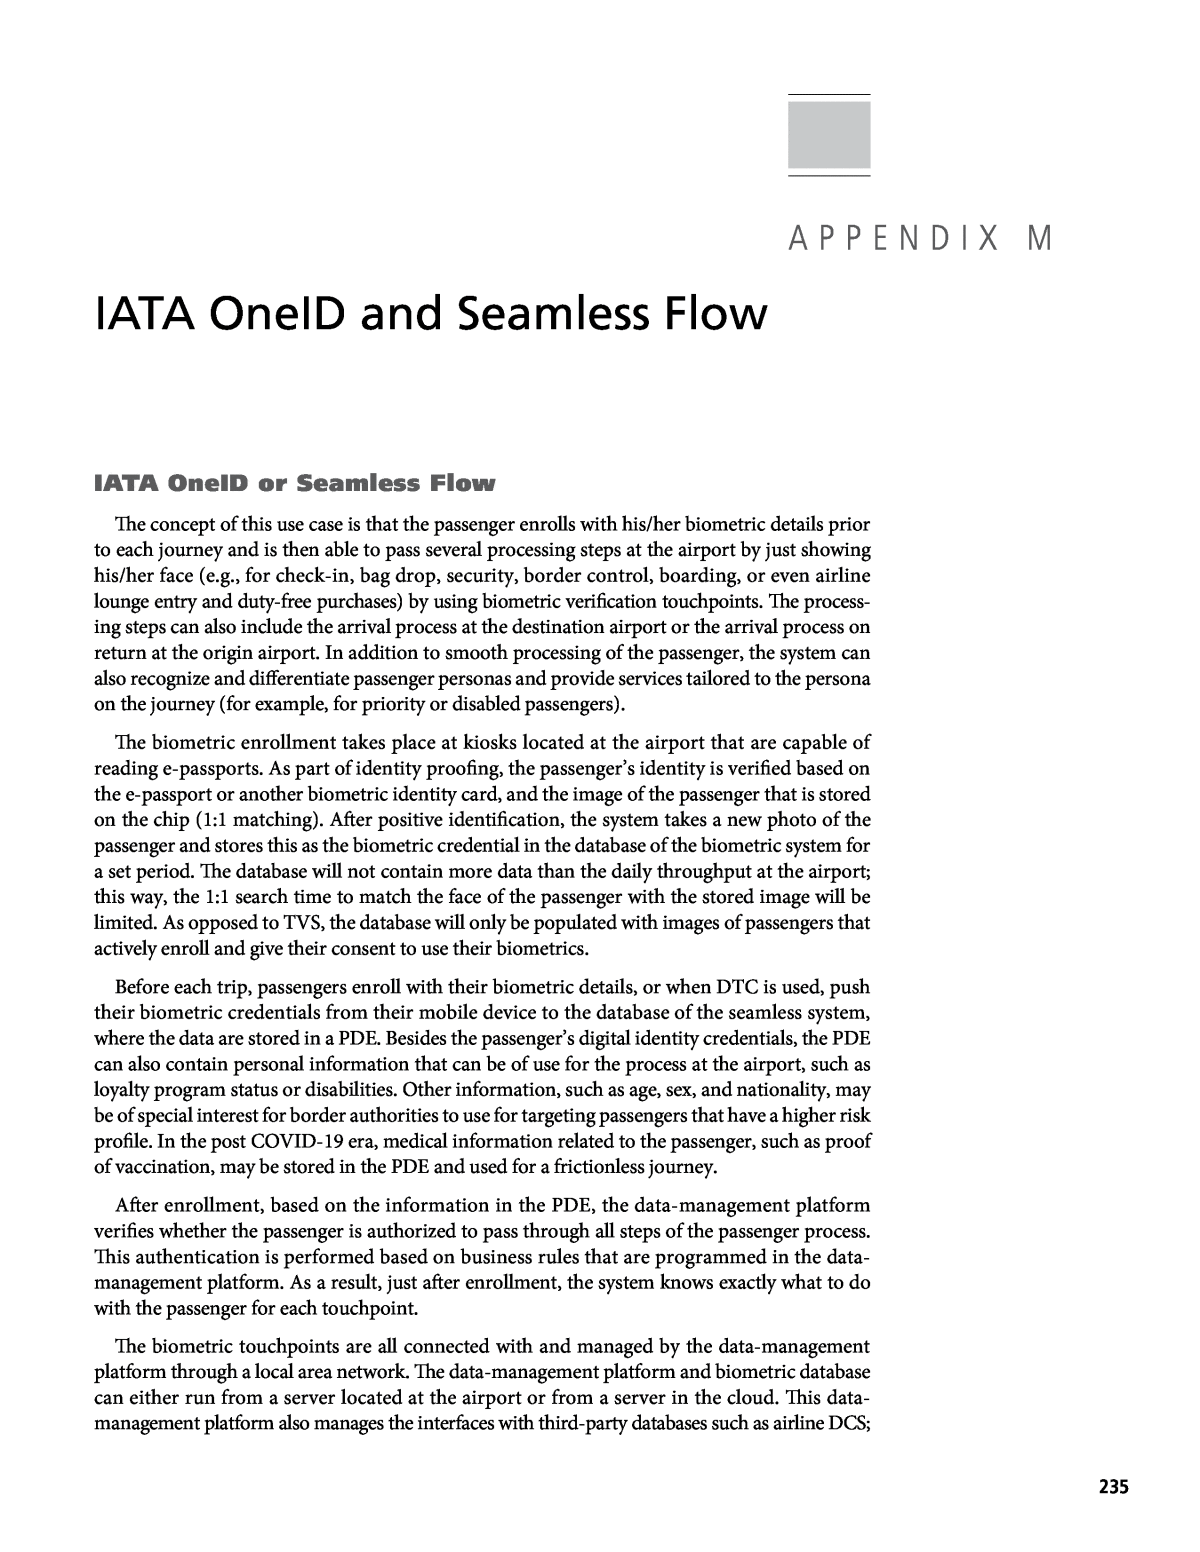 Appendix M - IATA OneID and Seamless Flow